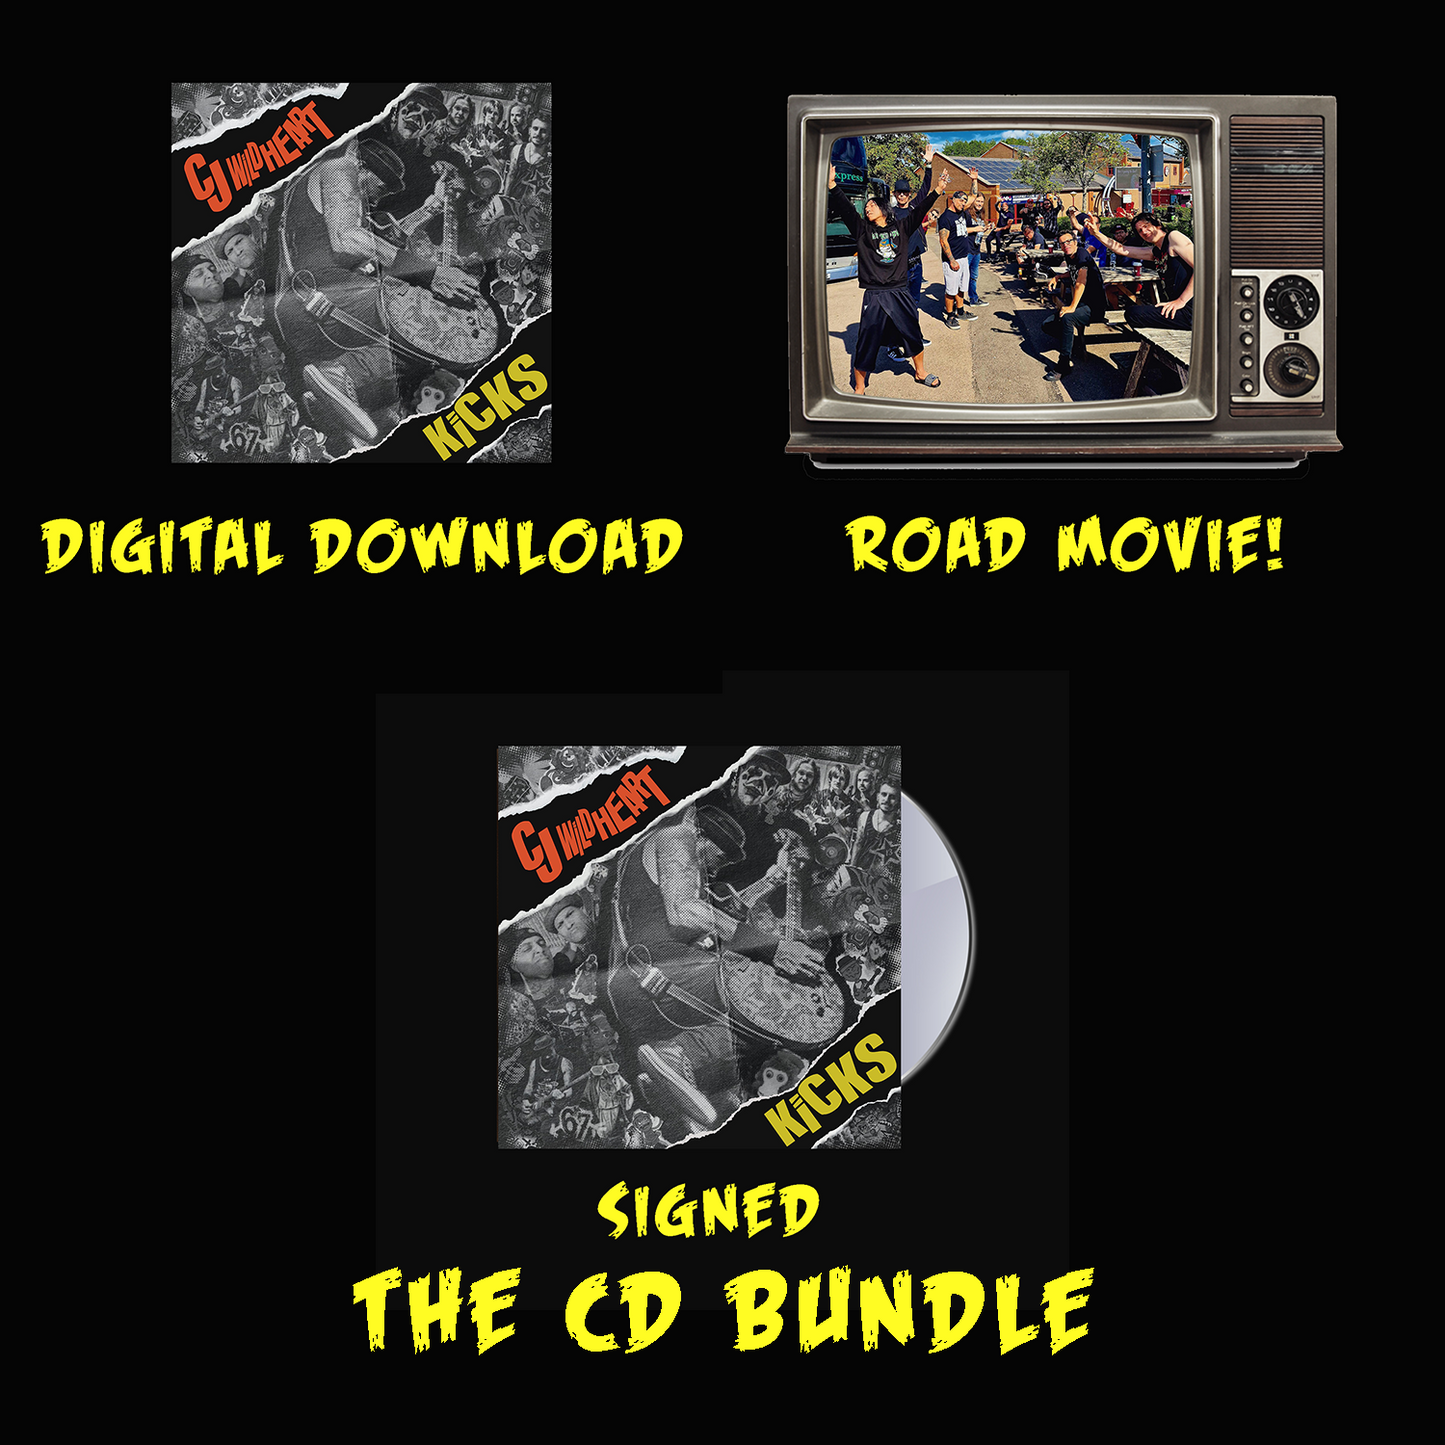 The CD Bundle